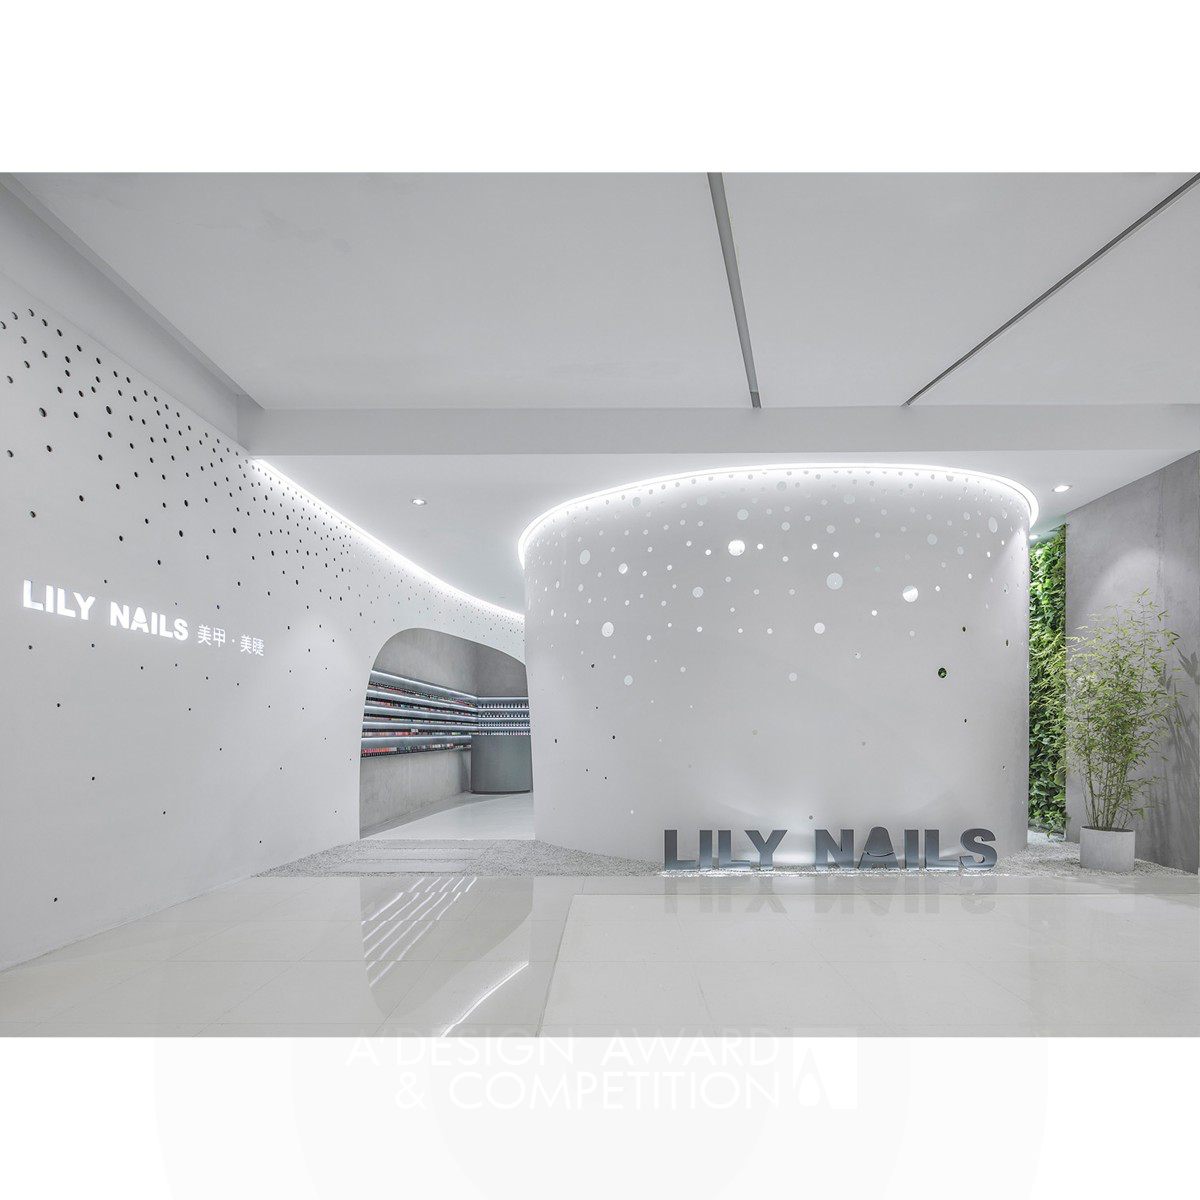 Lily Nails Salon by Wenqiang Han